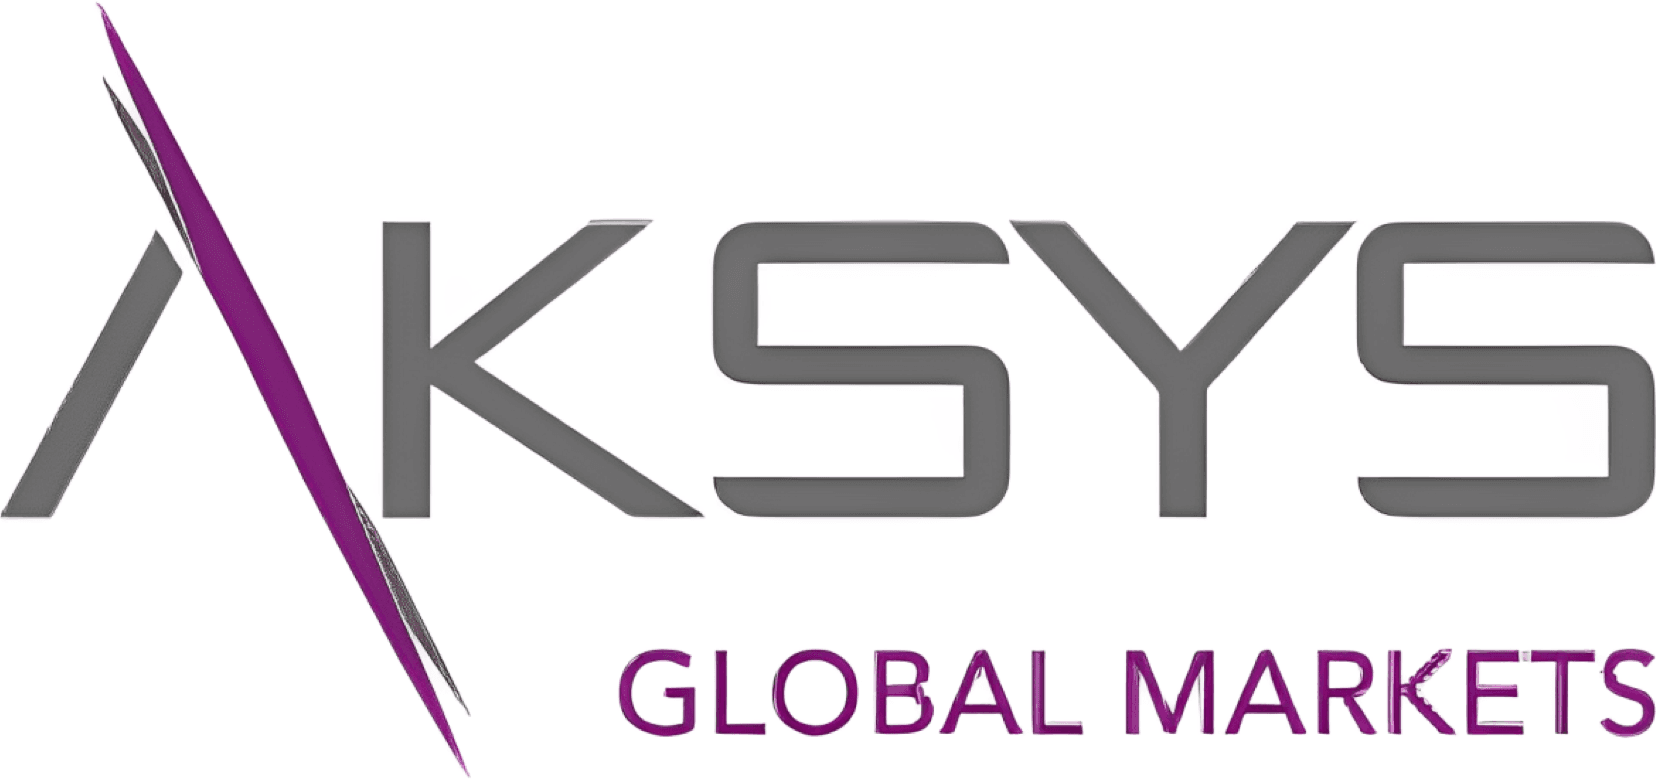 Aksys Global Markets